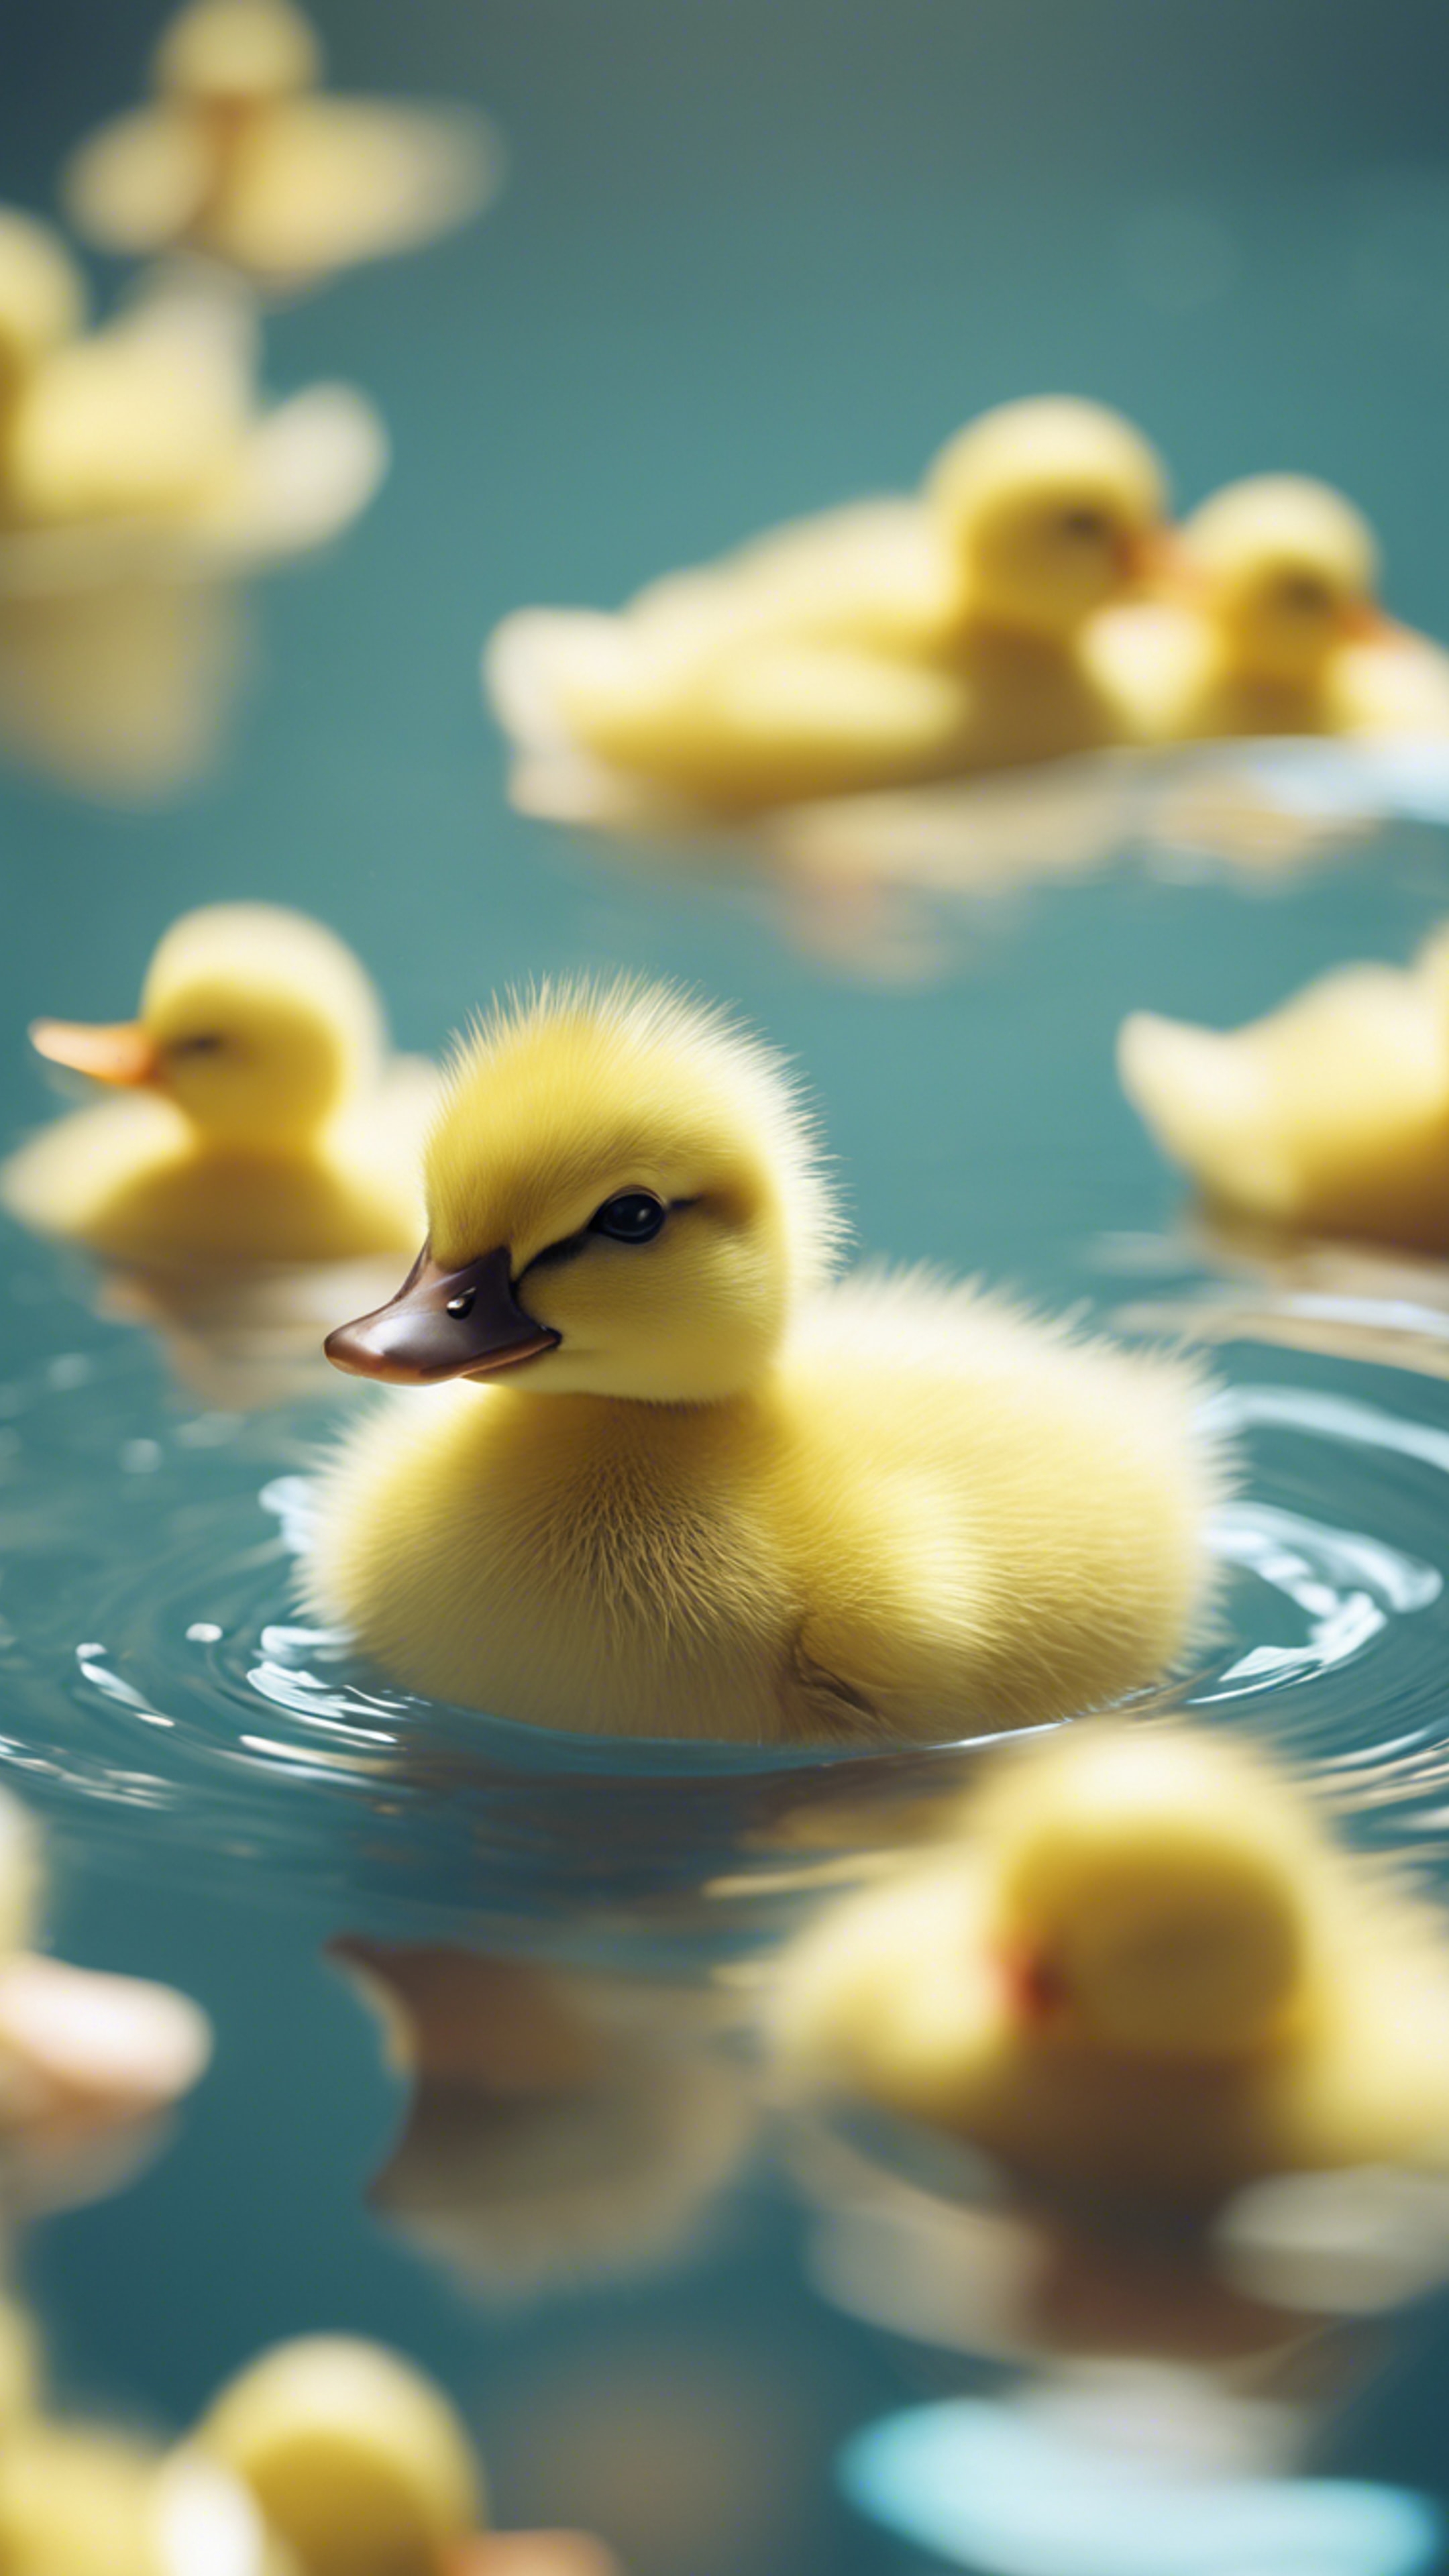 A small, chubby, kawaii yellow duckling swimming in a pastel blue pond. Sfondo[2b07b187d2cc4e759cc9]